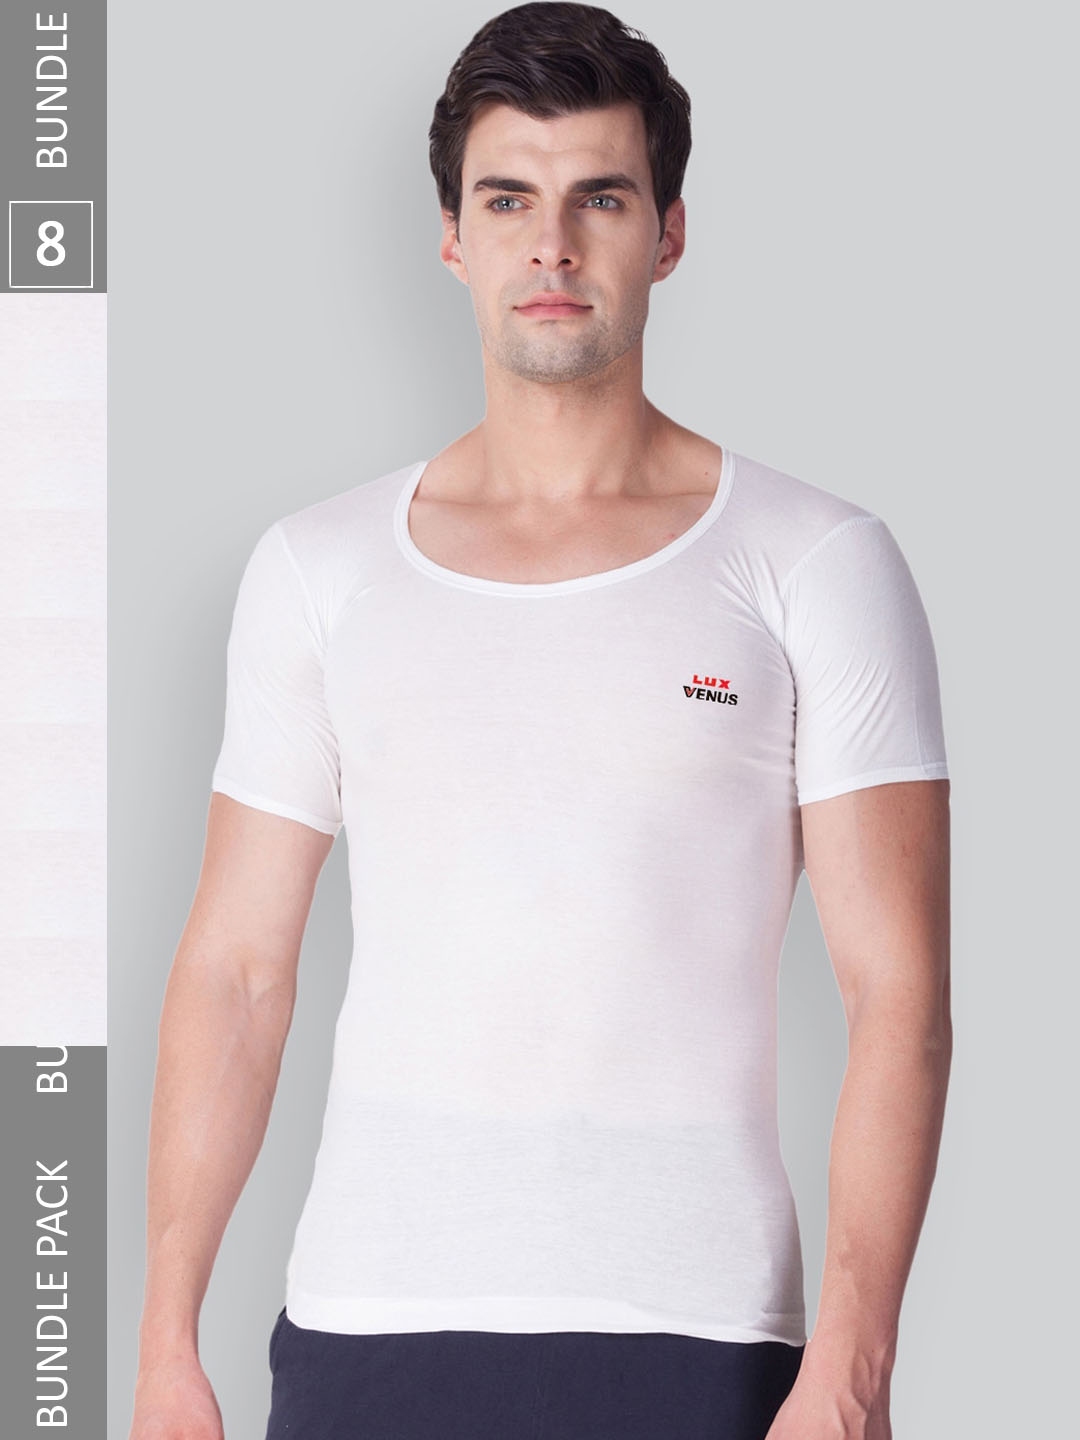 Buy Ramraj Men White Solid Pure Cotton Half Sleeve Innerwear Vests